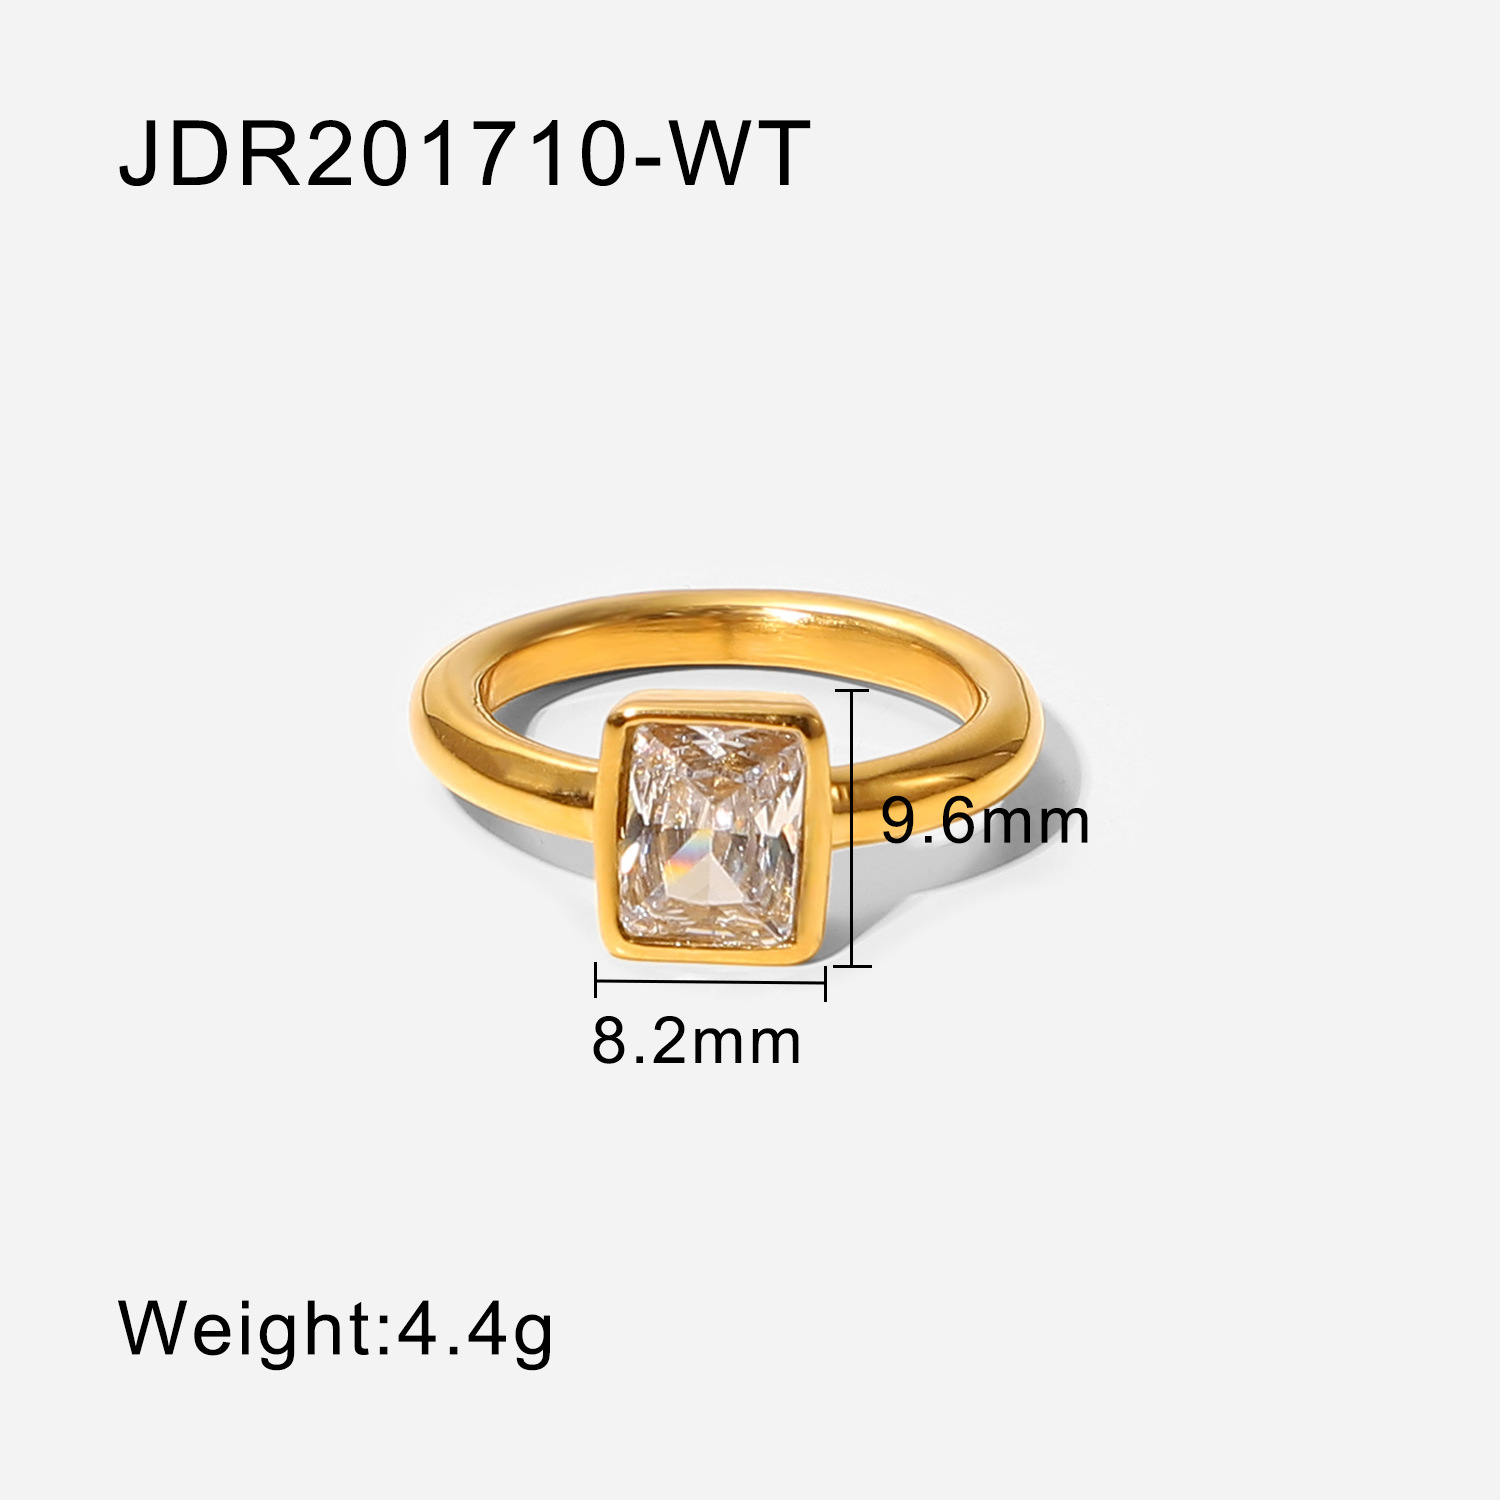 JDR201710-WT No.7